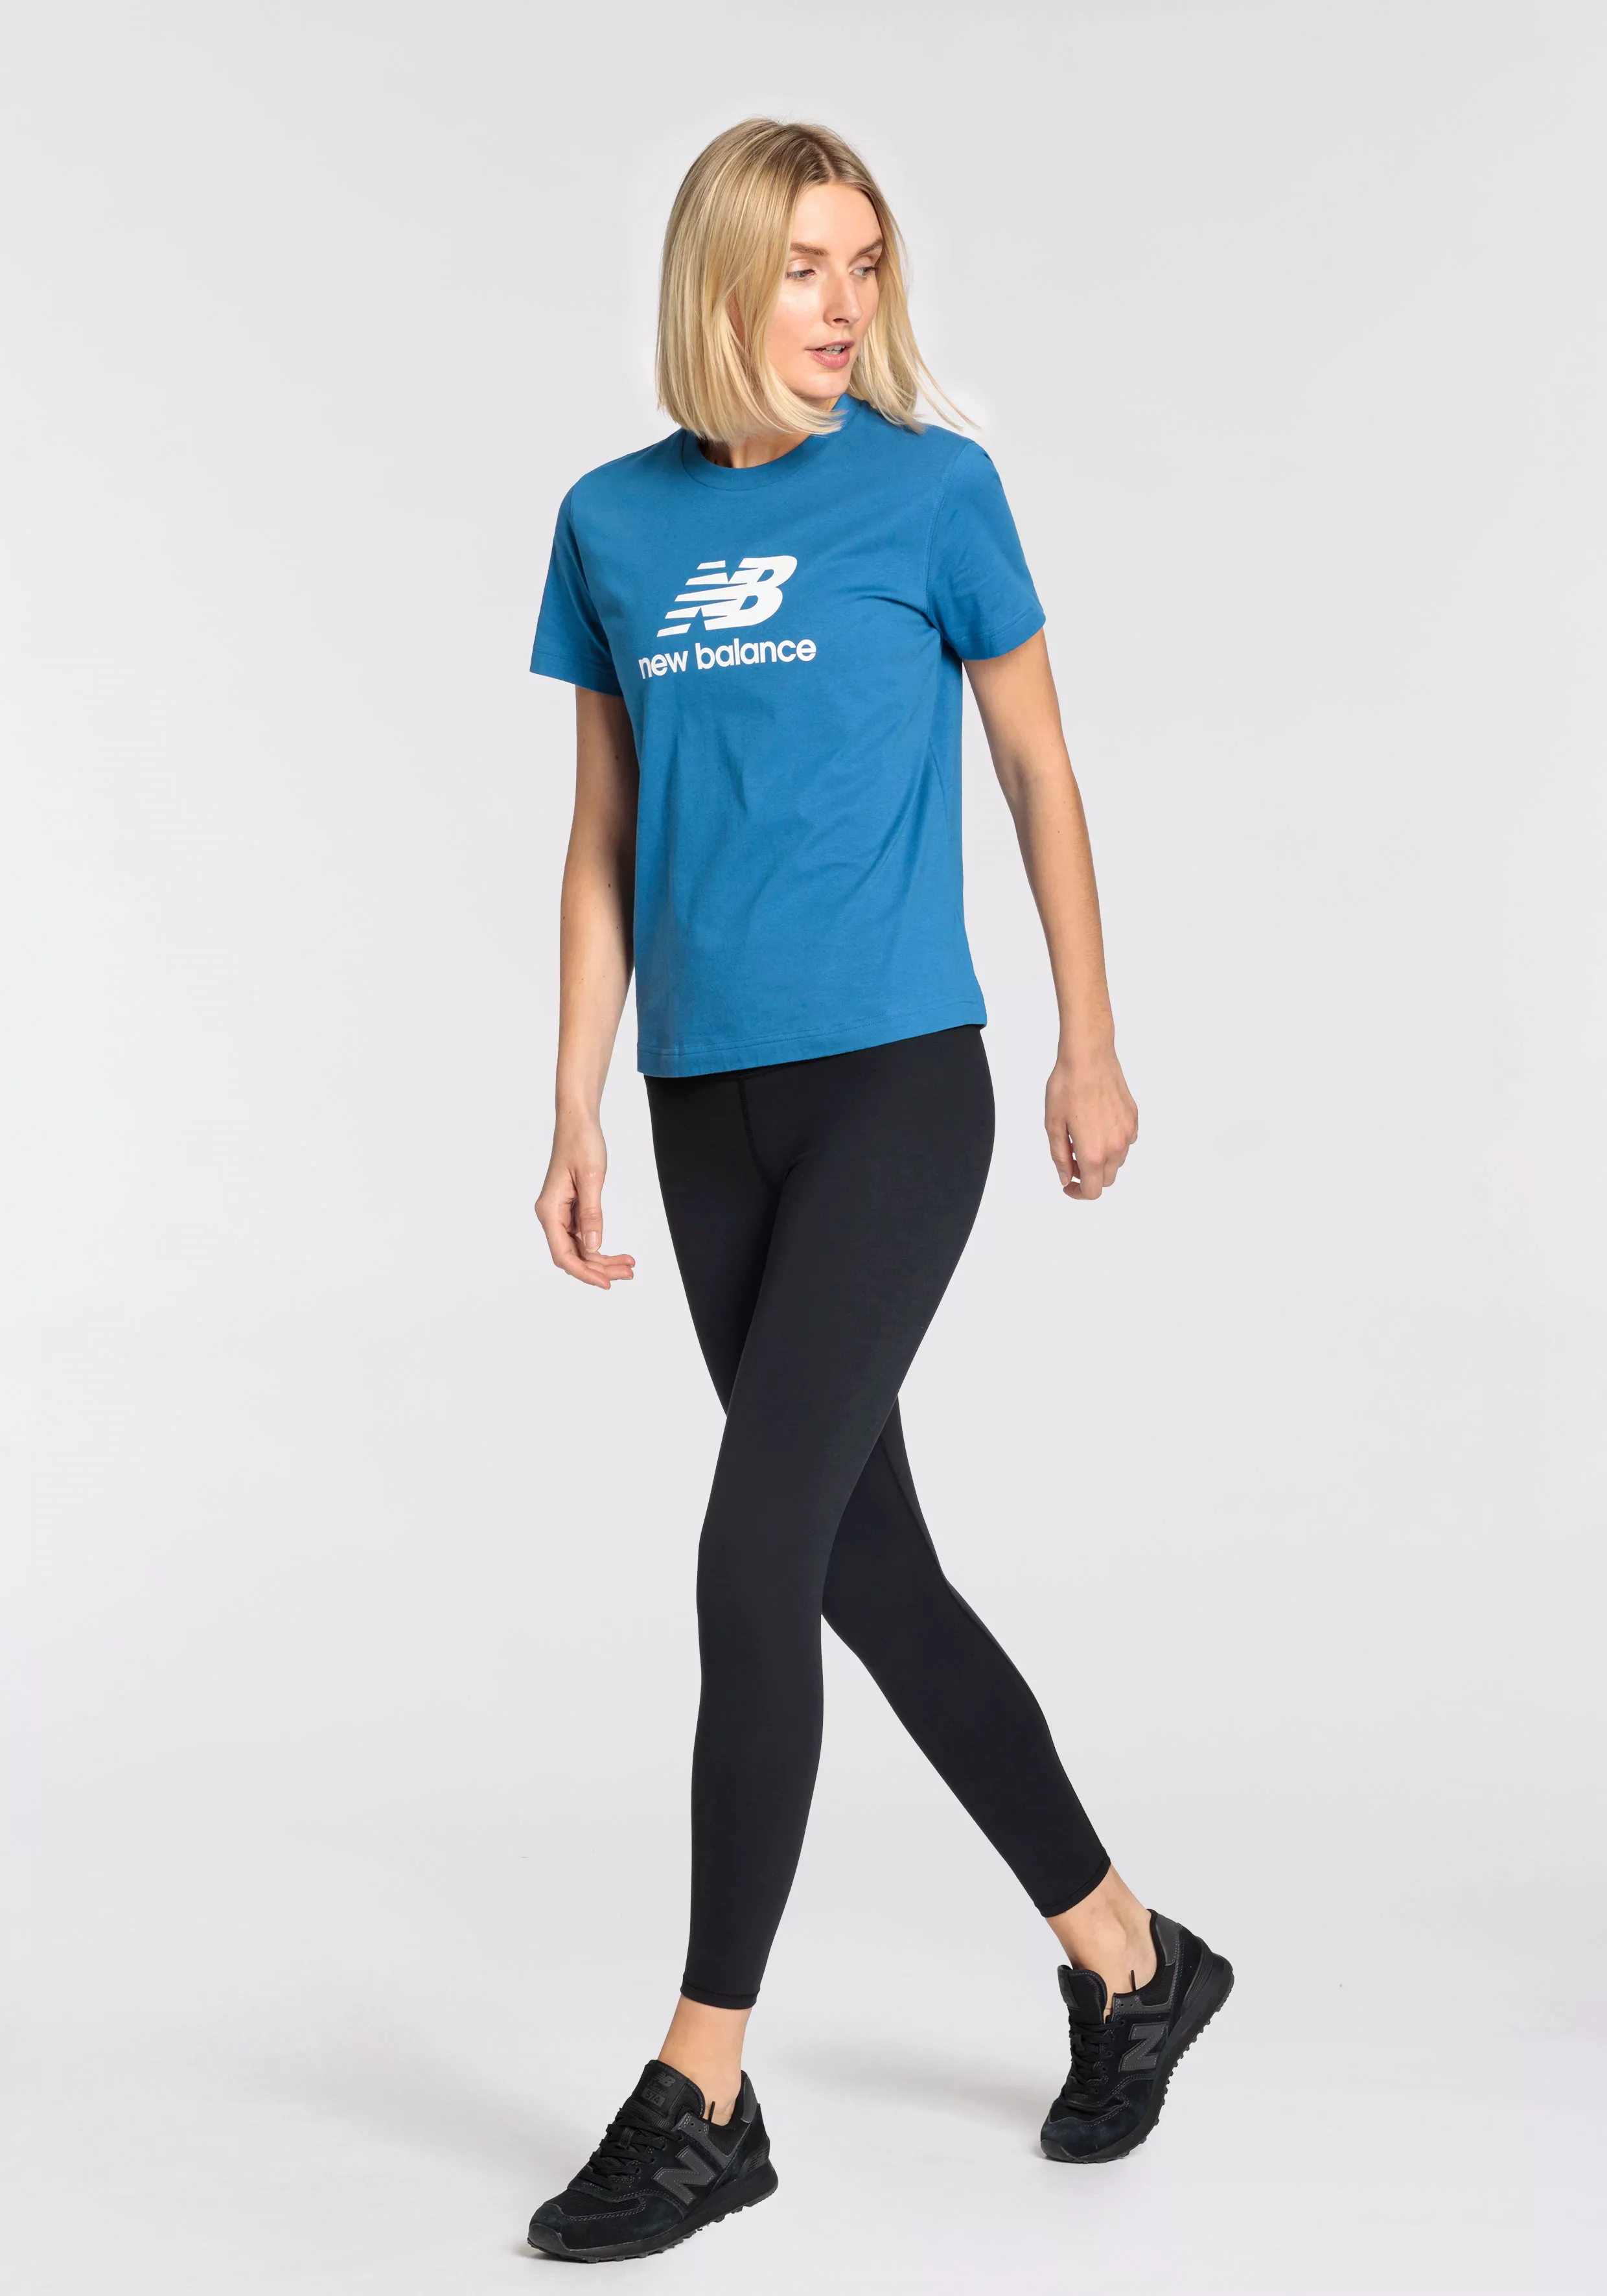 New Balance T-Shirt "WOMENS LIFESTYLE S/S TOP" günstig online kaufen